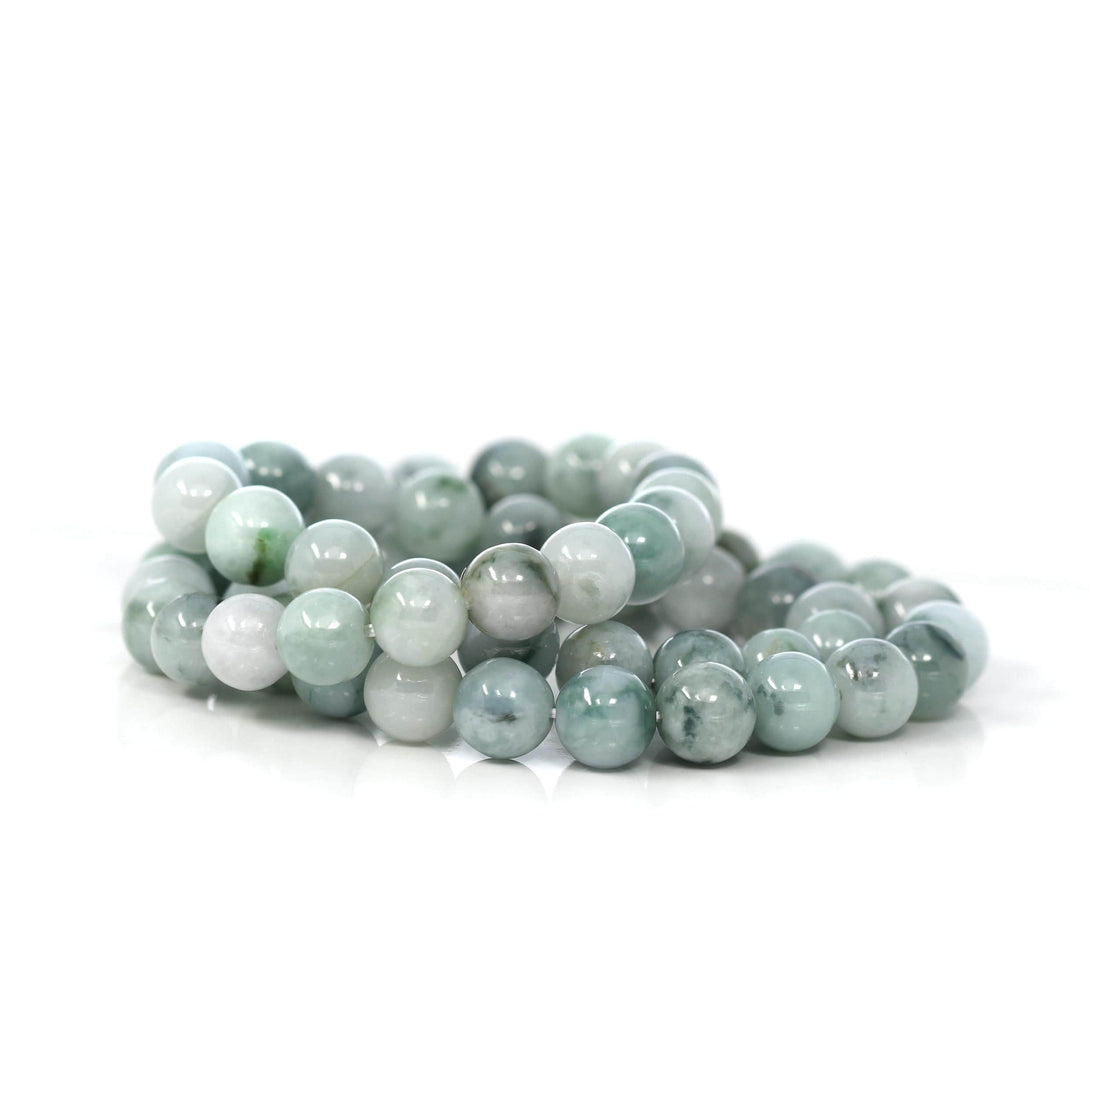 Baikalla Jewelry jade beads bracelet 6.5 inches Jadeite Jade 10mm Round Blue Green Beads Bracelet (10mm)